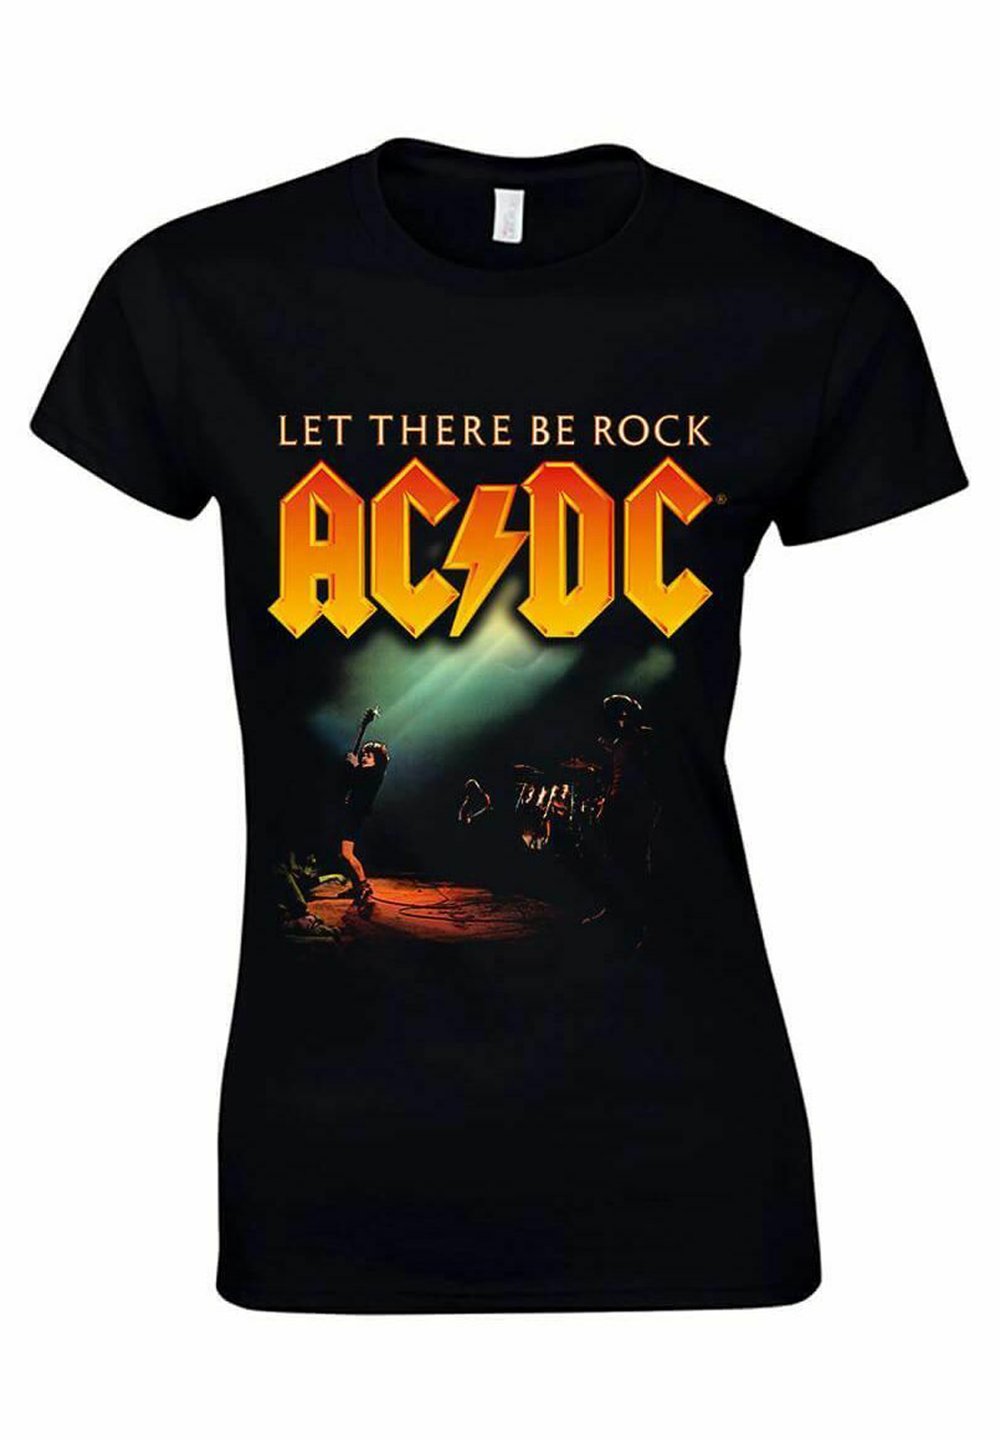 Футболка с принтом AC DC-LET THERE BE ROCK rockshirts, цвет black масино сьюзан let there be rock история группы ac dc